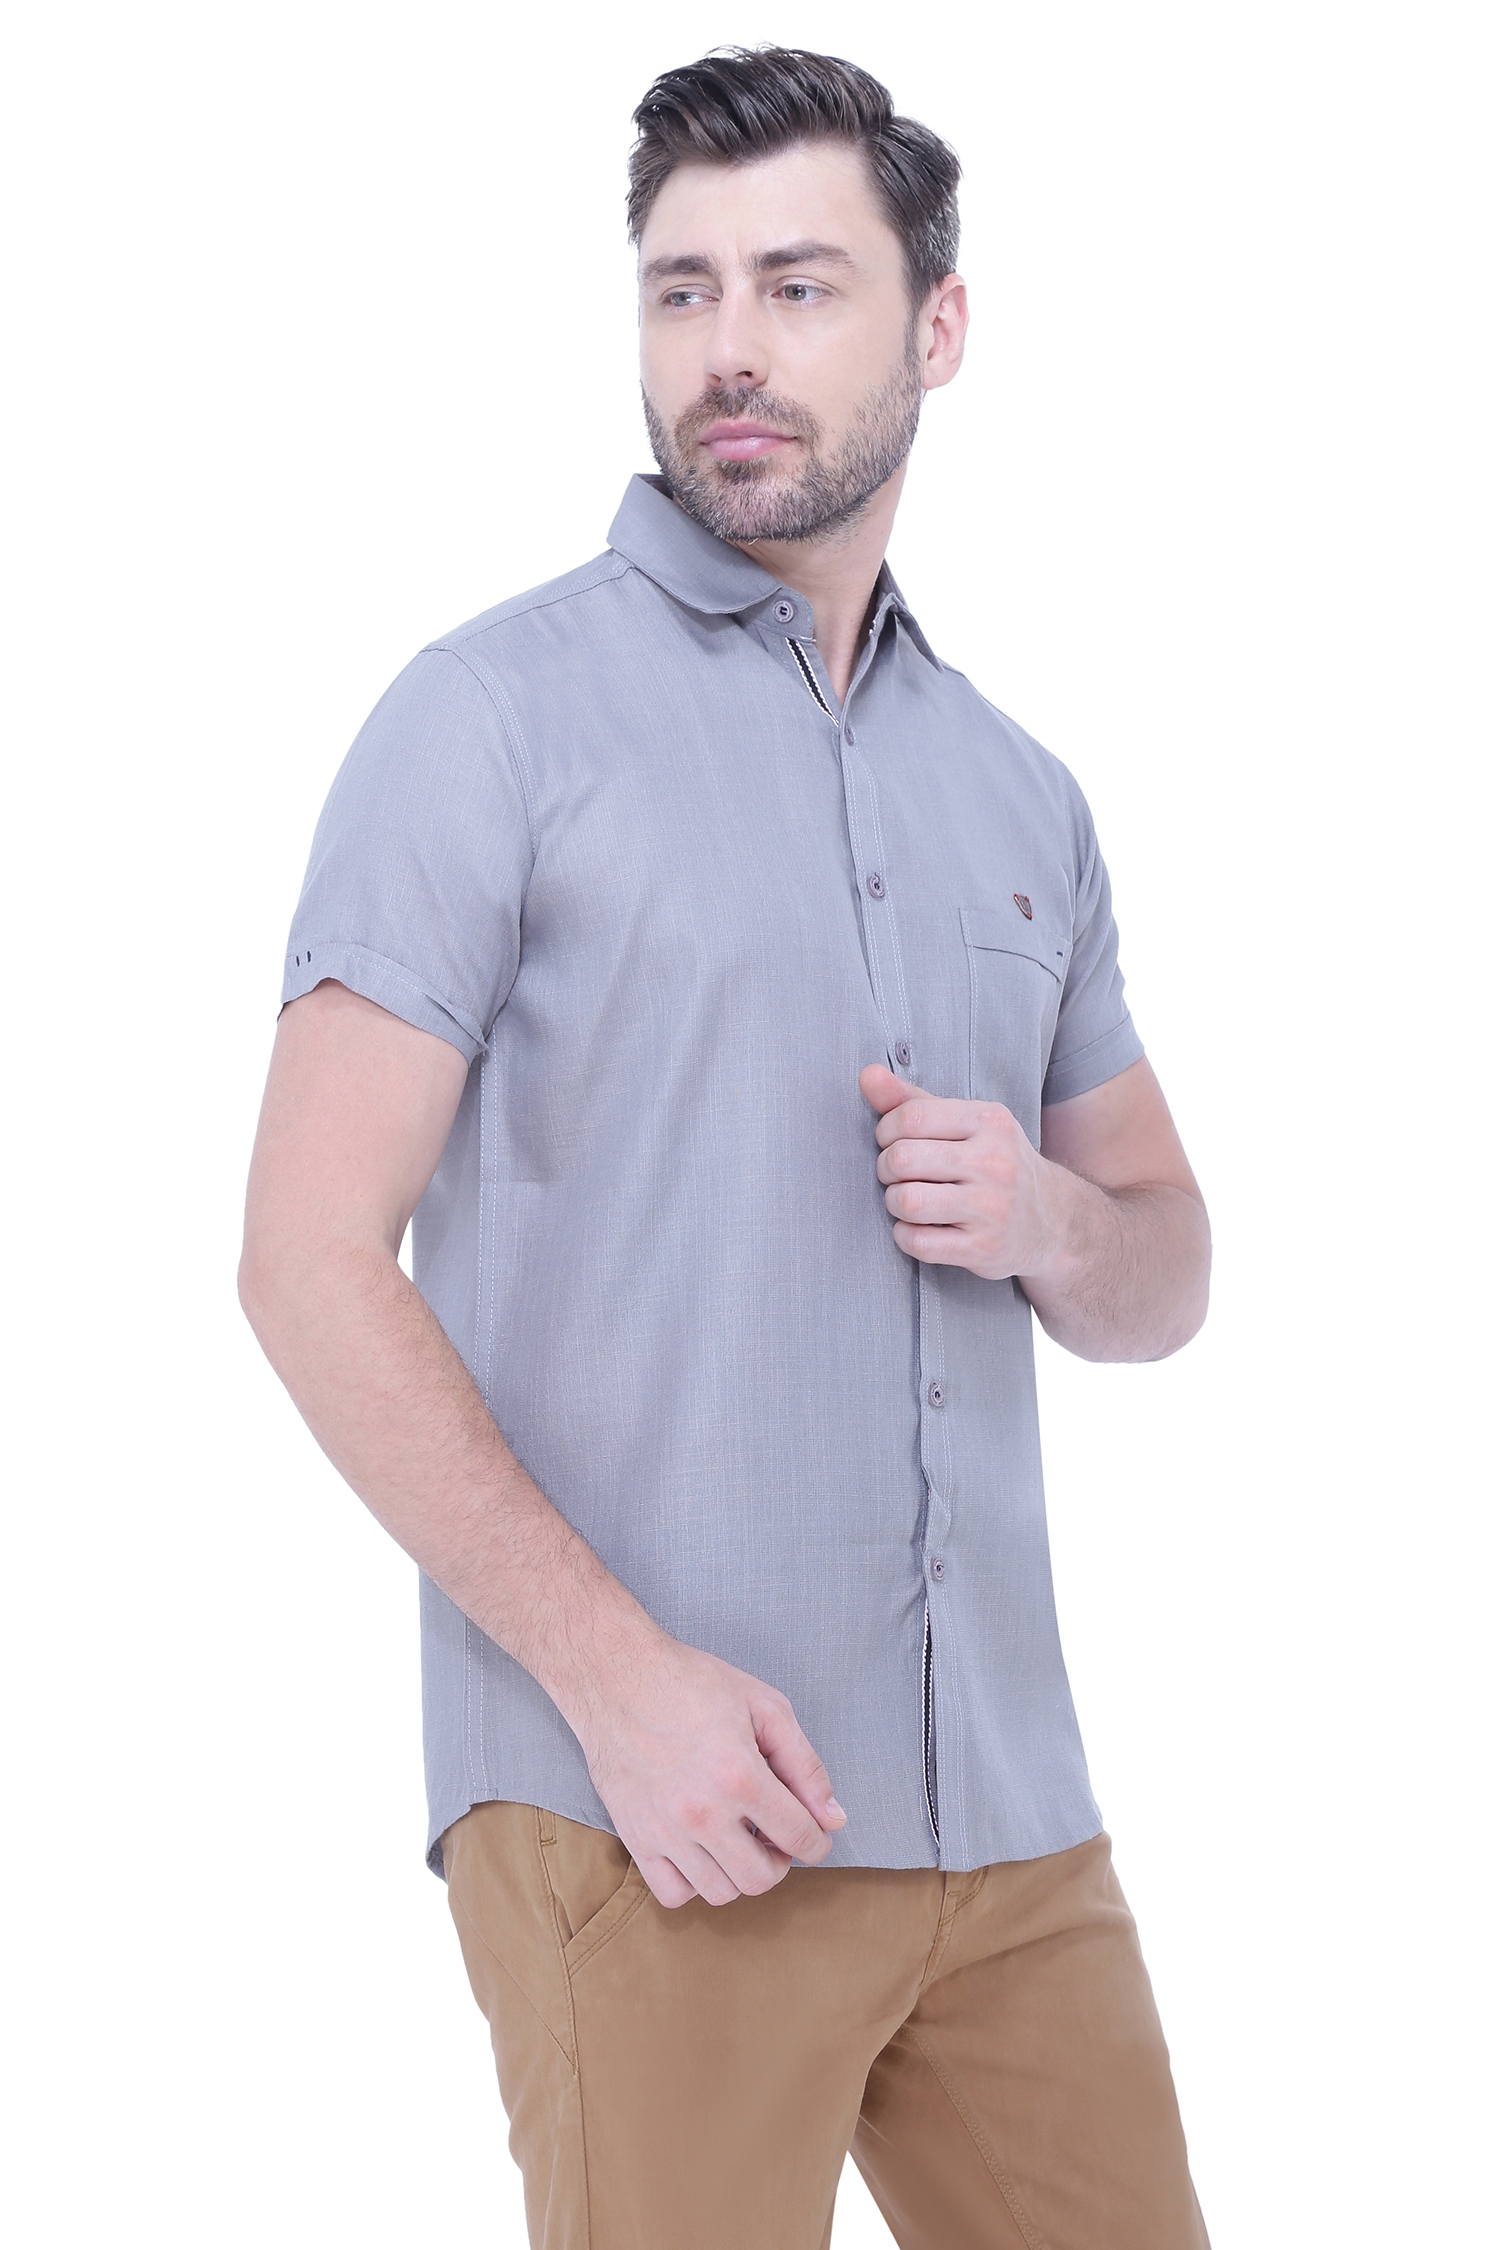 Kuons Avenue | Kuons Avenue Men's Linen Blend Half Sleeves Casual Shirt-KACLHS1236 5